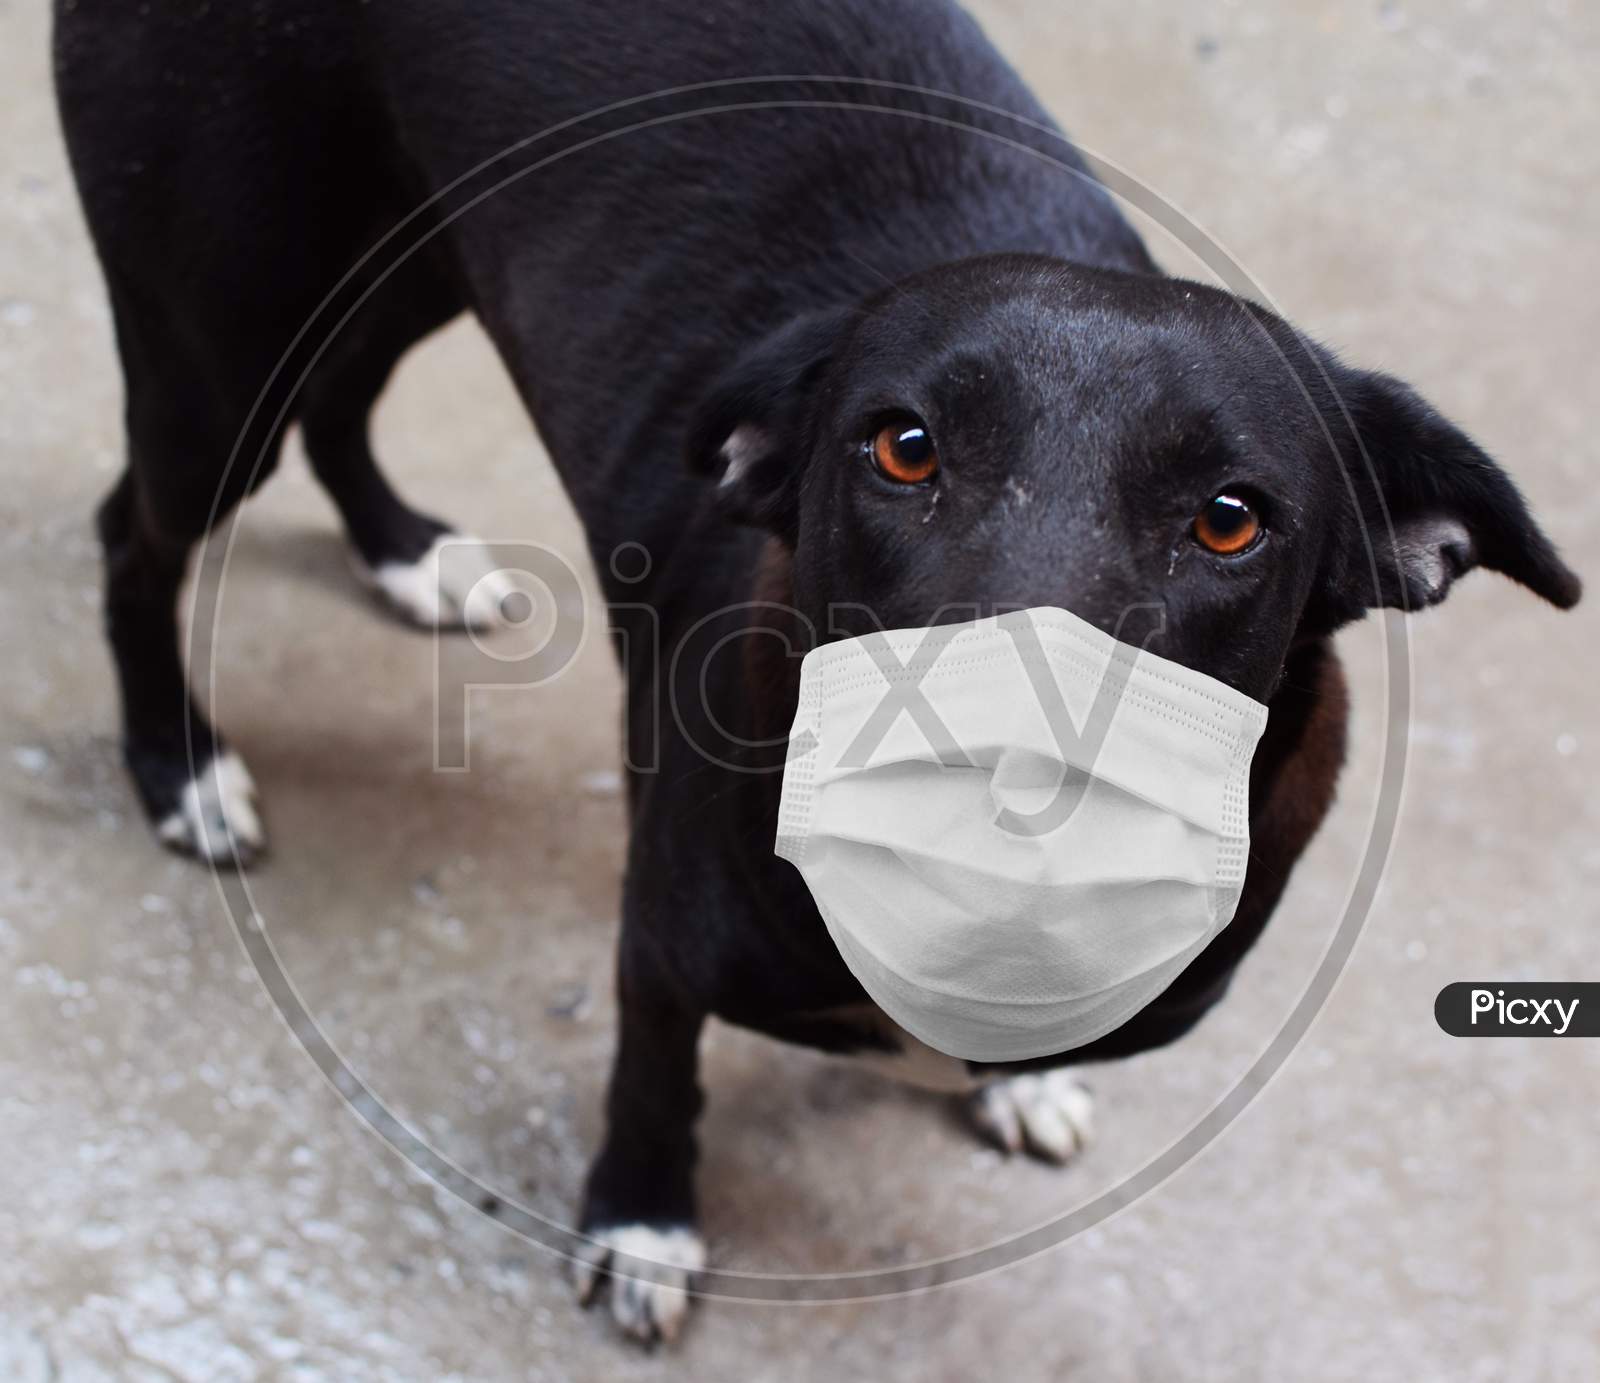 Stray dog with mask